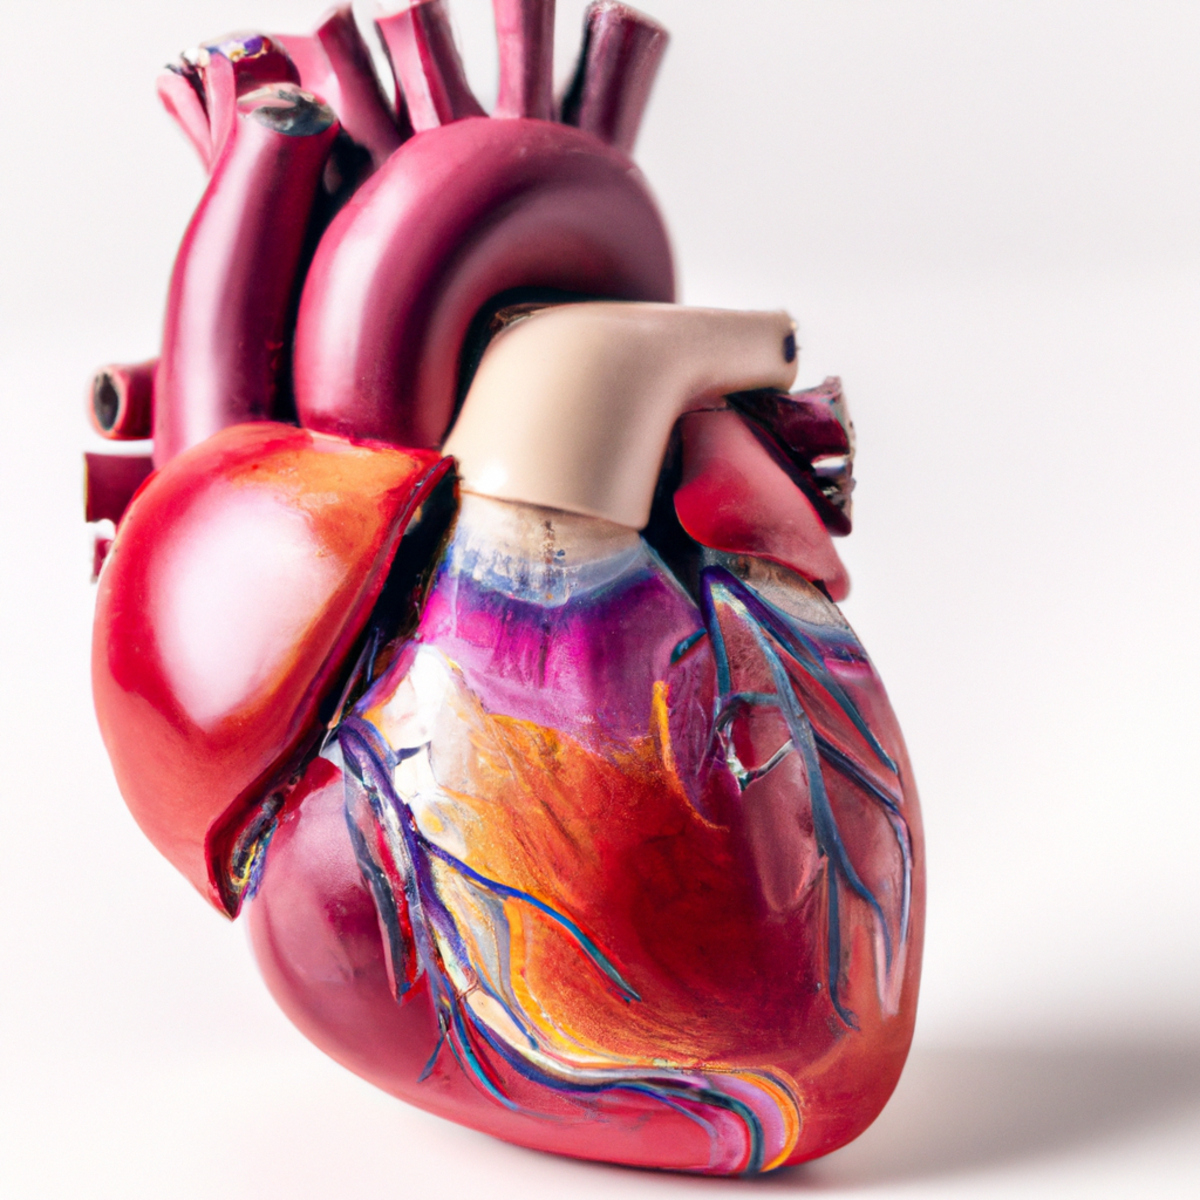 Close-up of vibrant, lifelike heart model symbolizing Takotsubo Cardiomyopathy (Broken Heart Syndrome), surrounded by medical instruments, evoking curiosity and exploration.